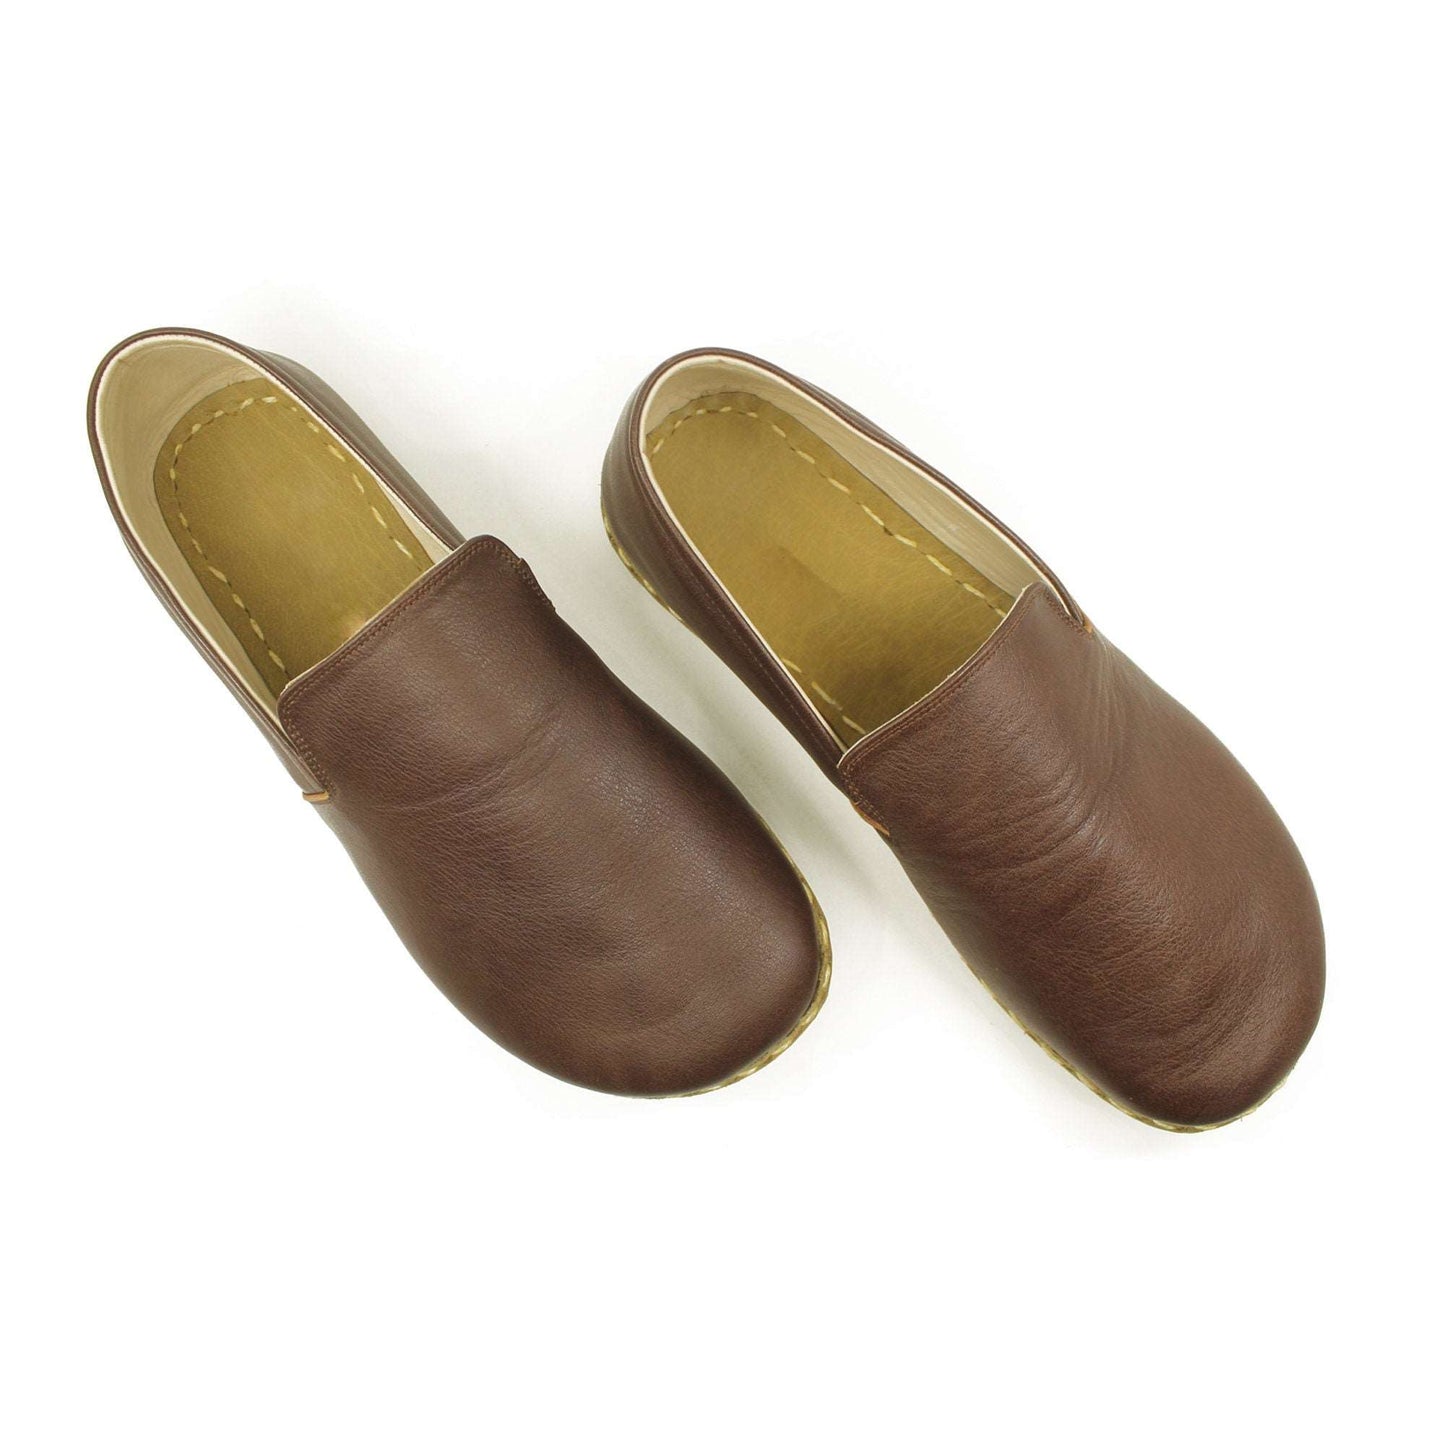 Men Barefoot Shoes, Handmade, New Brown Leather, Modern Copper Rivet